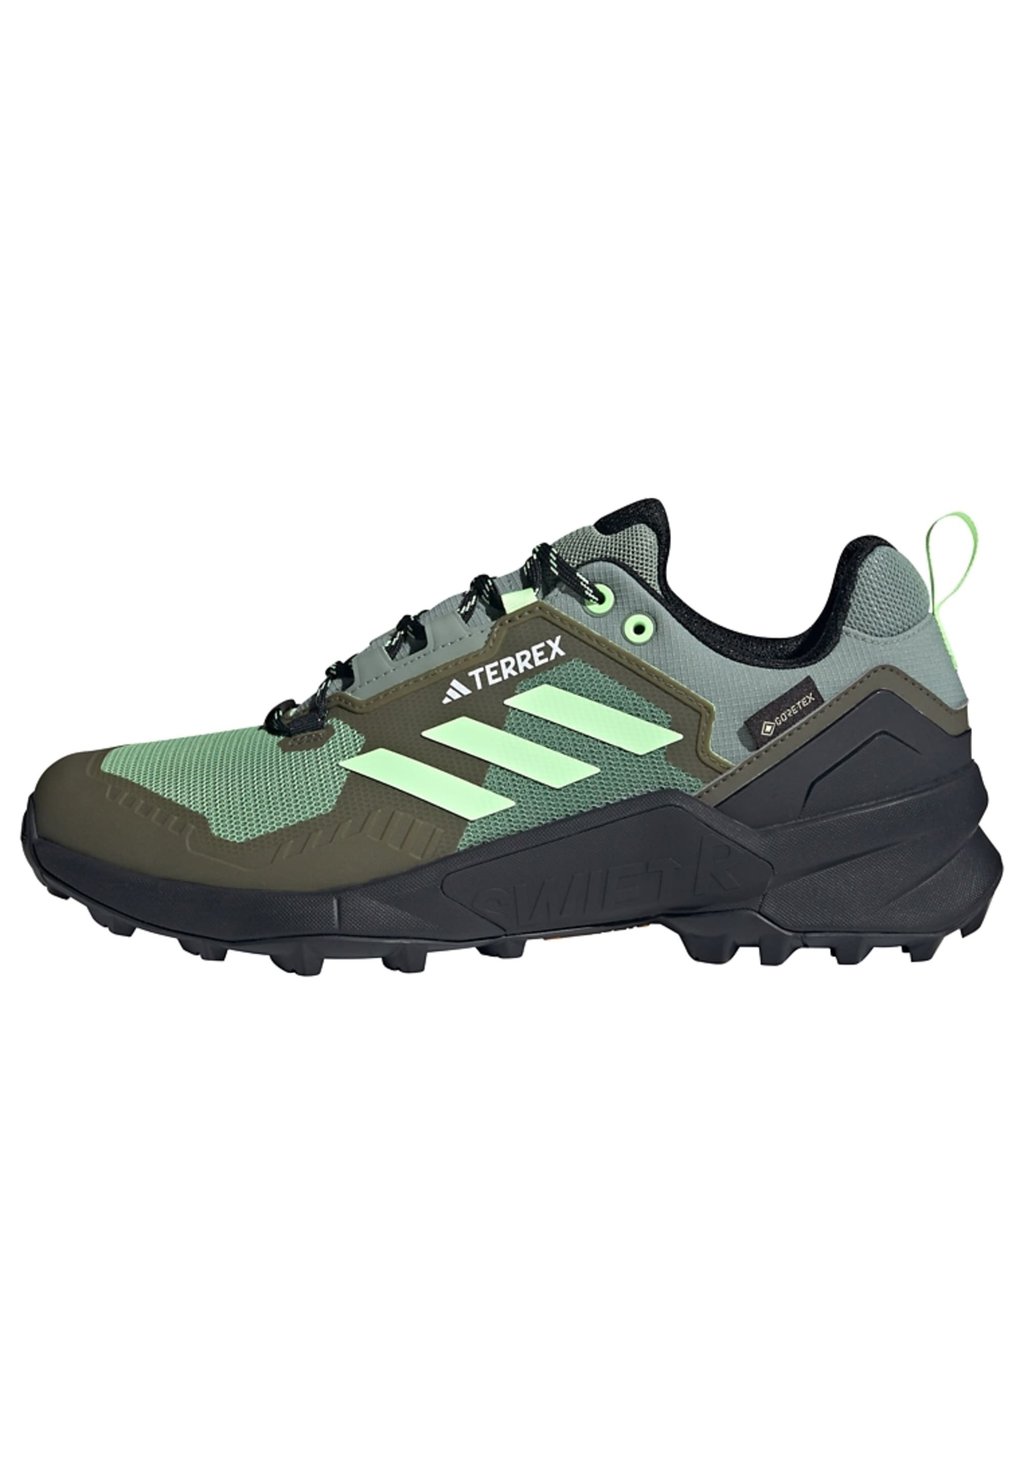 Кроссовки для походов Swift R3 Gore-Tex Adidas, цвет silver green green spark olive strata